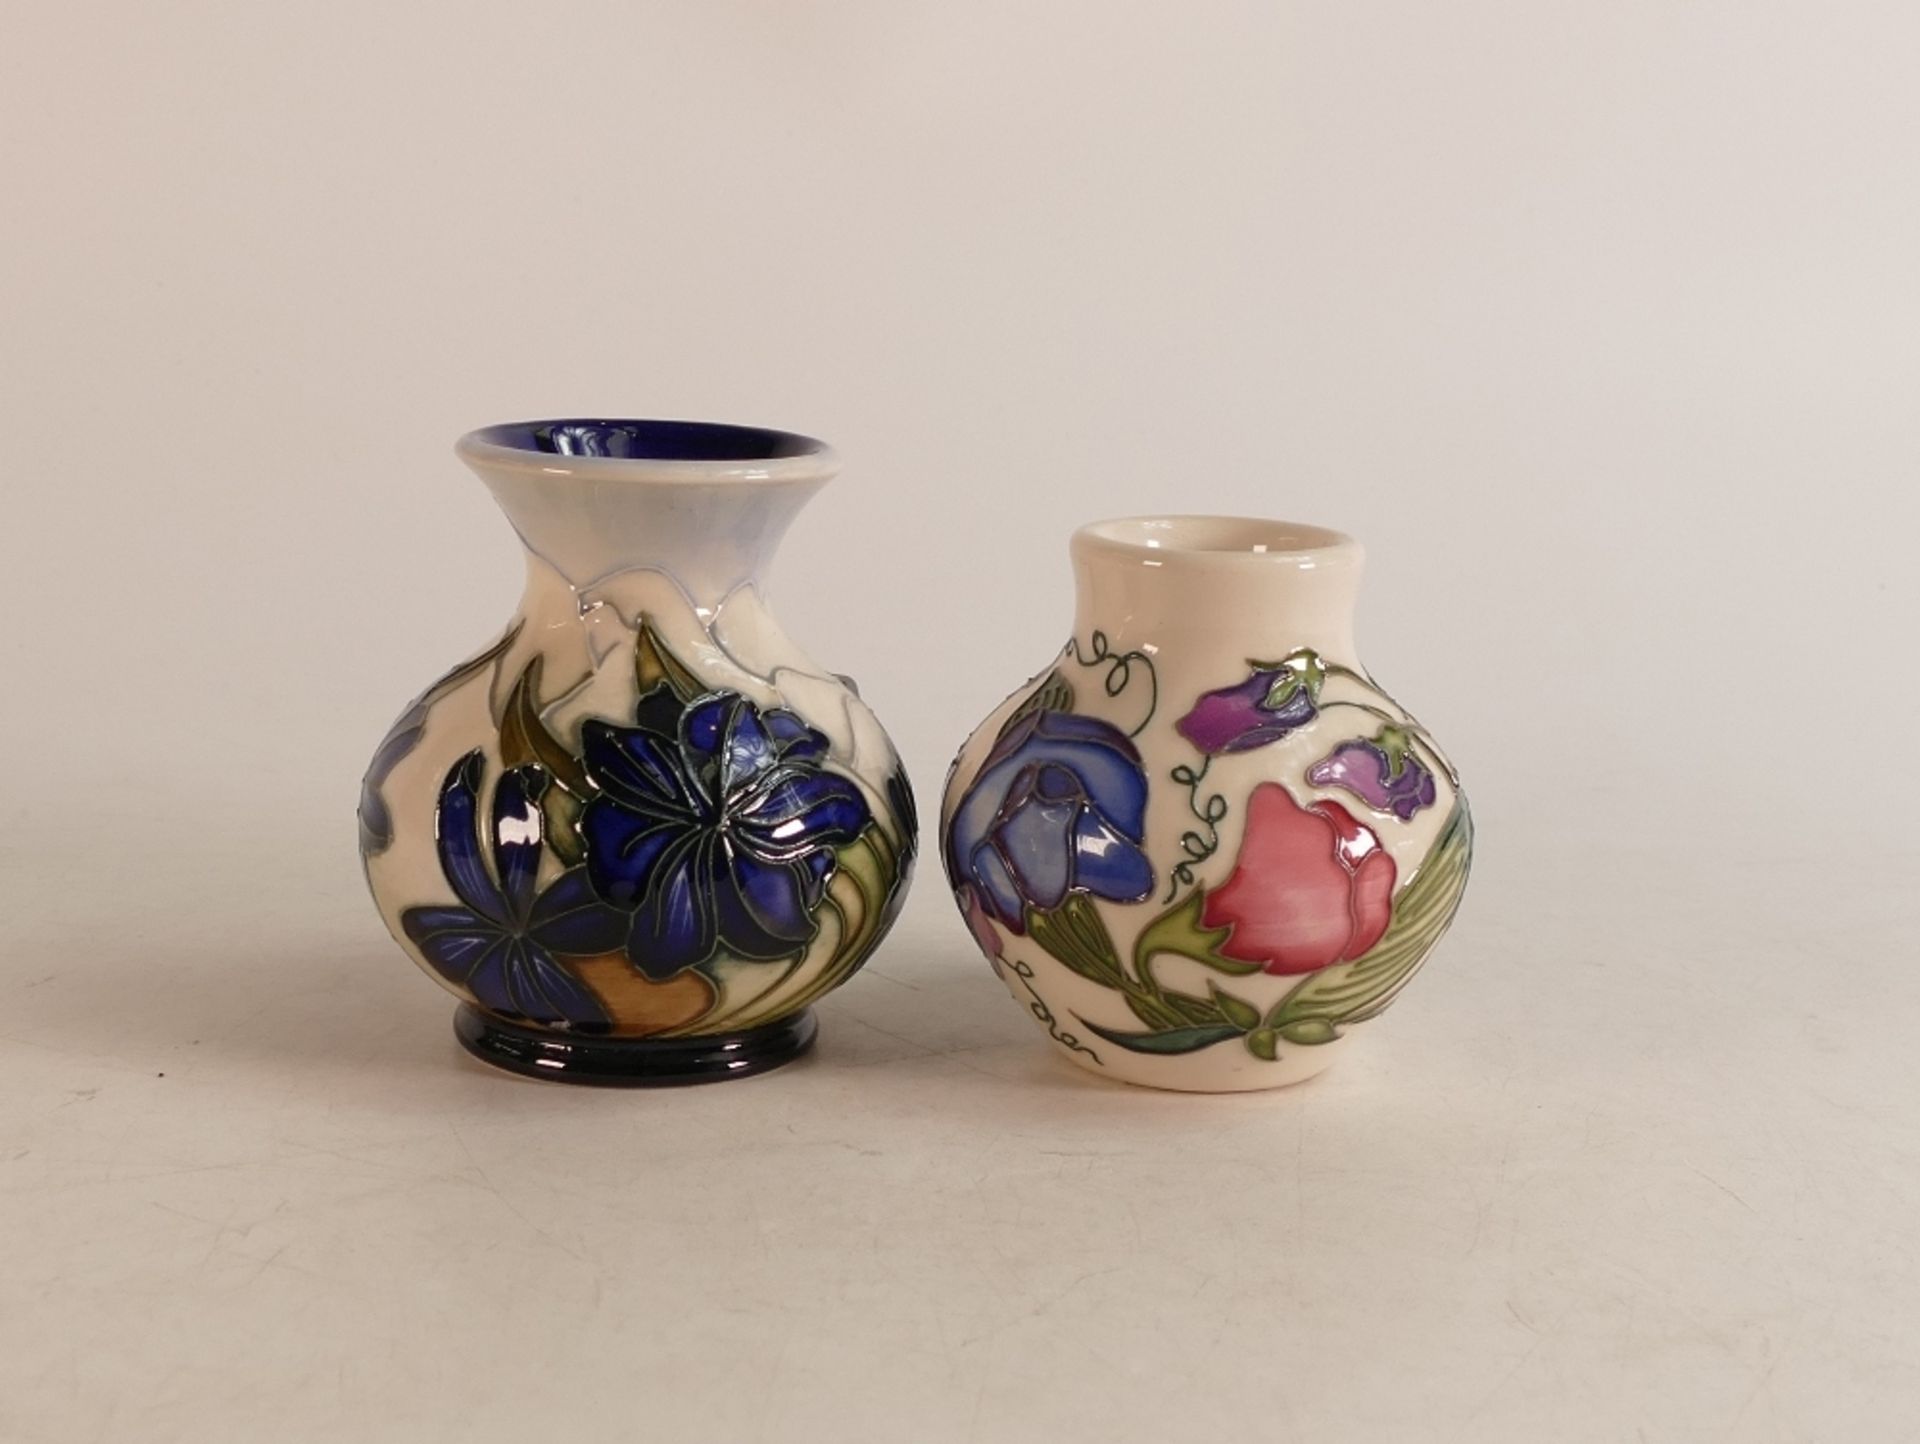 Moorcroft Chilean Crocus patterned vase together with Sweetness patterned vase, height of tallest